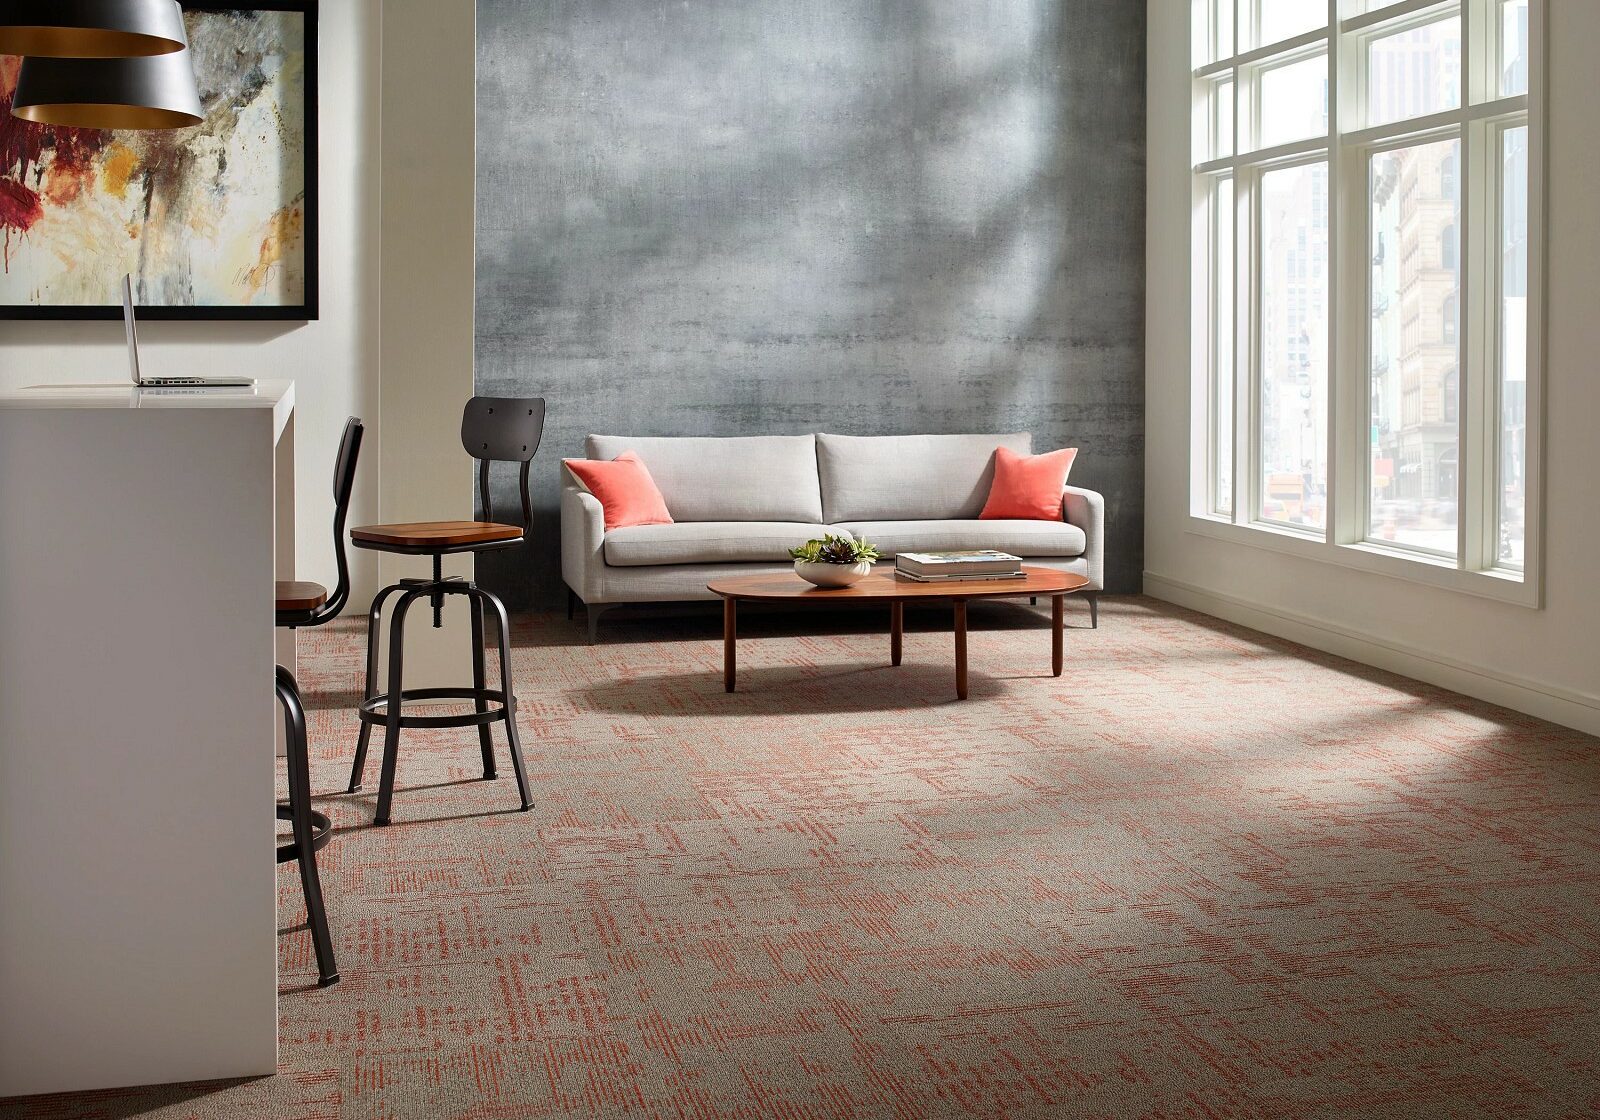 Carpeting in a living room | Carpetland USA